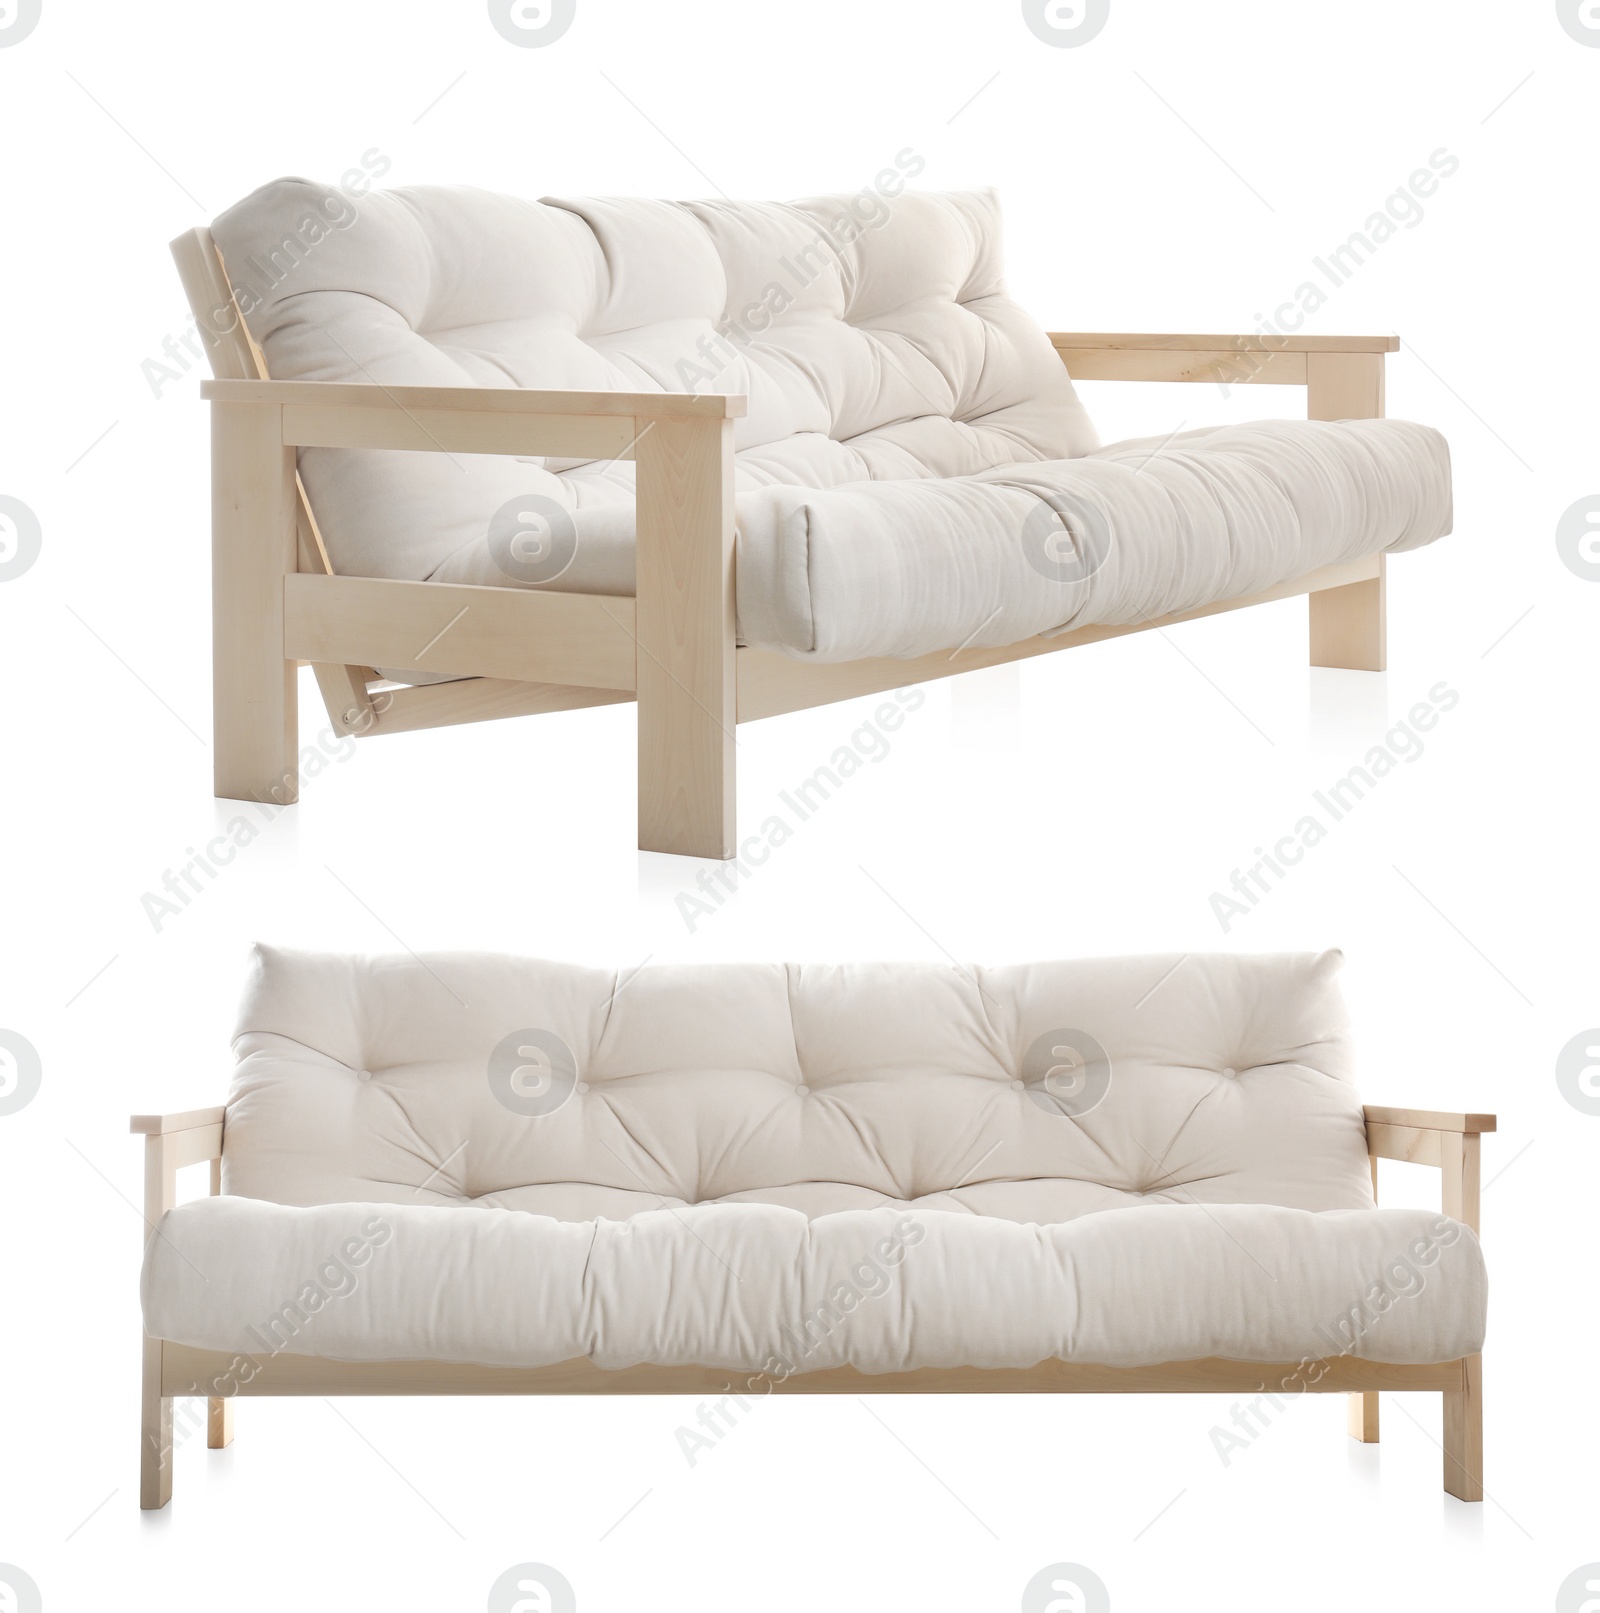 Image of Stylish comfortable light sofas on white background, collage